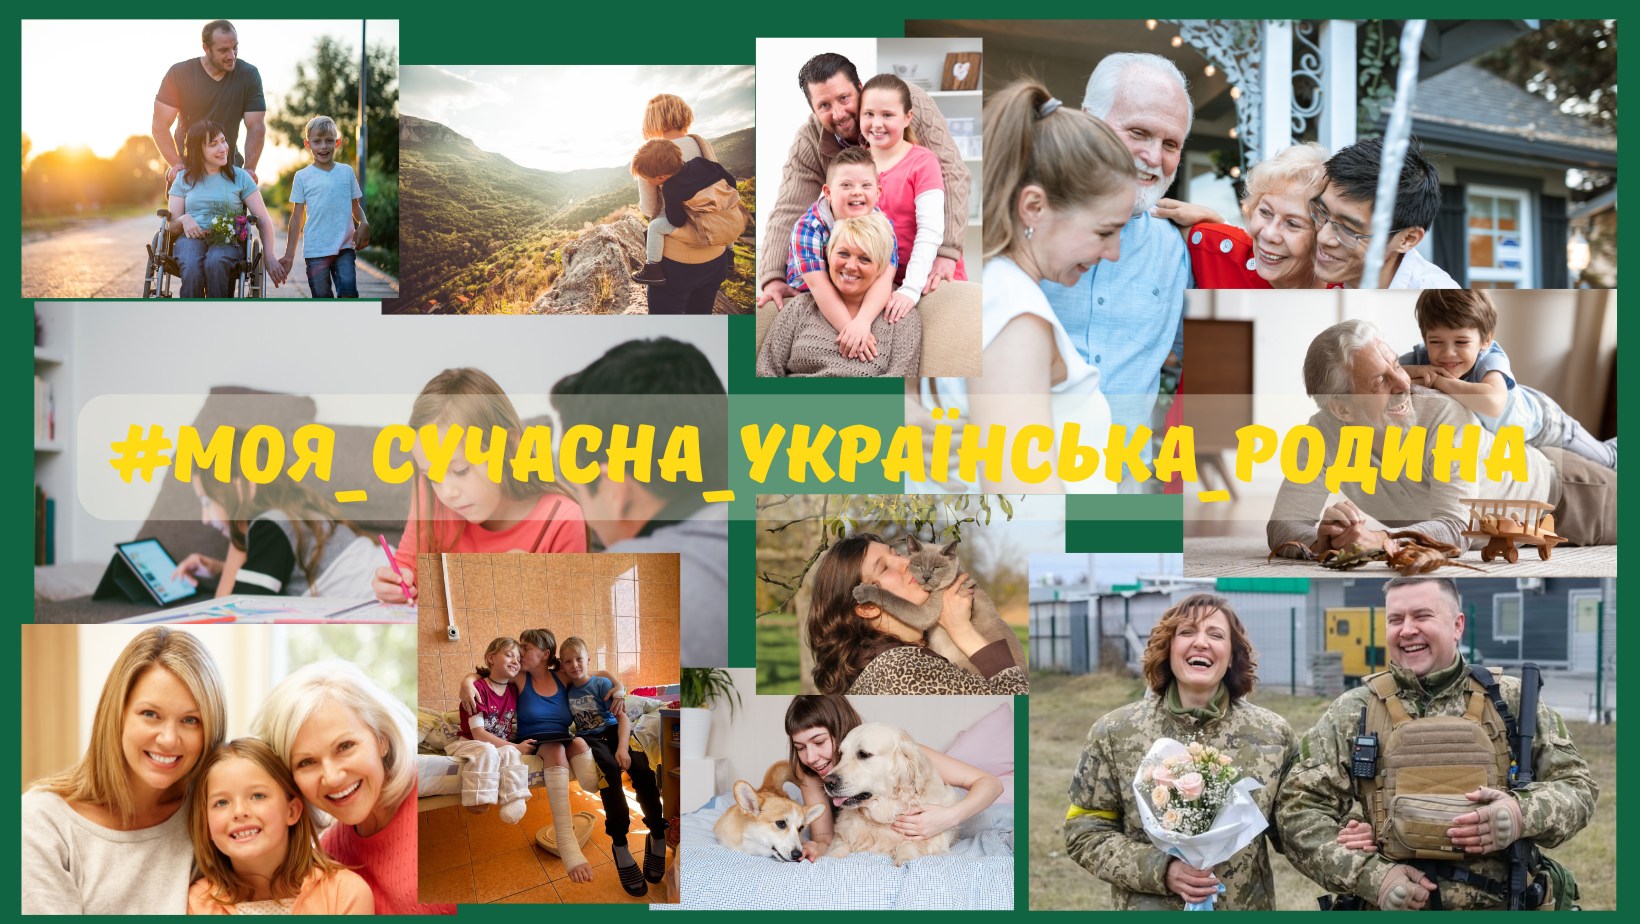 конкурс "Моя сучасна українська родина"